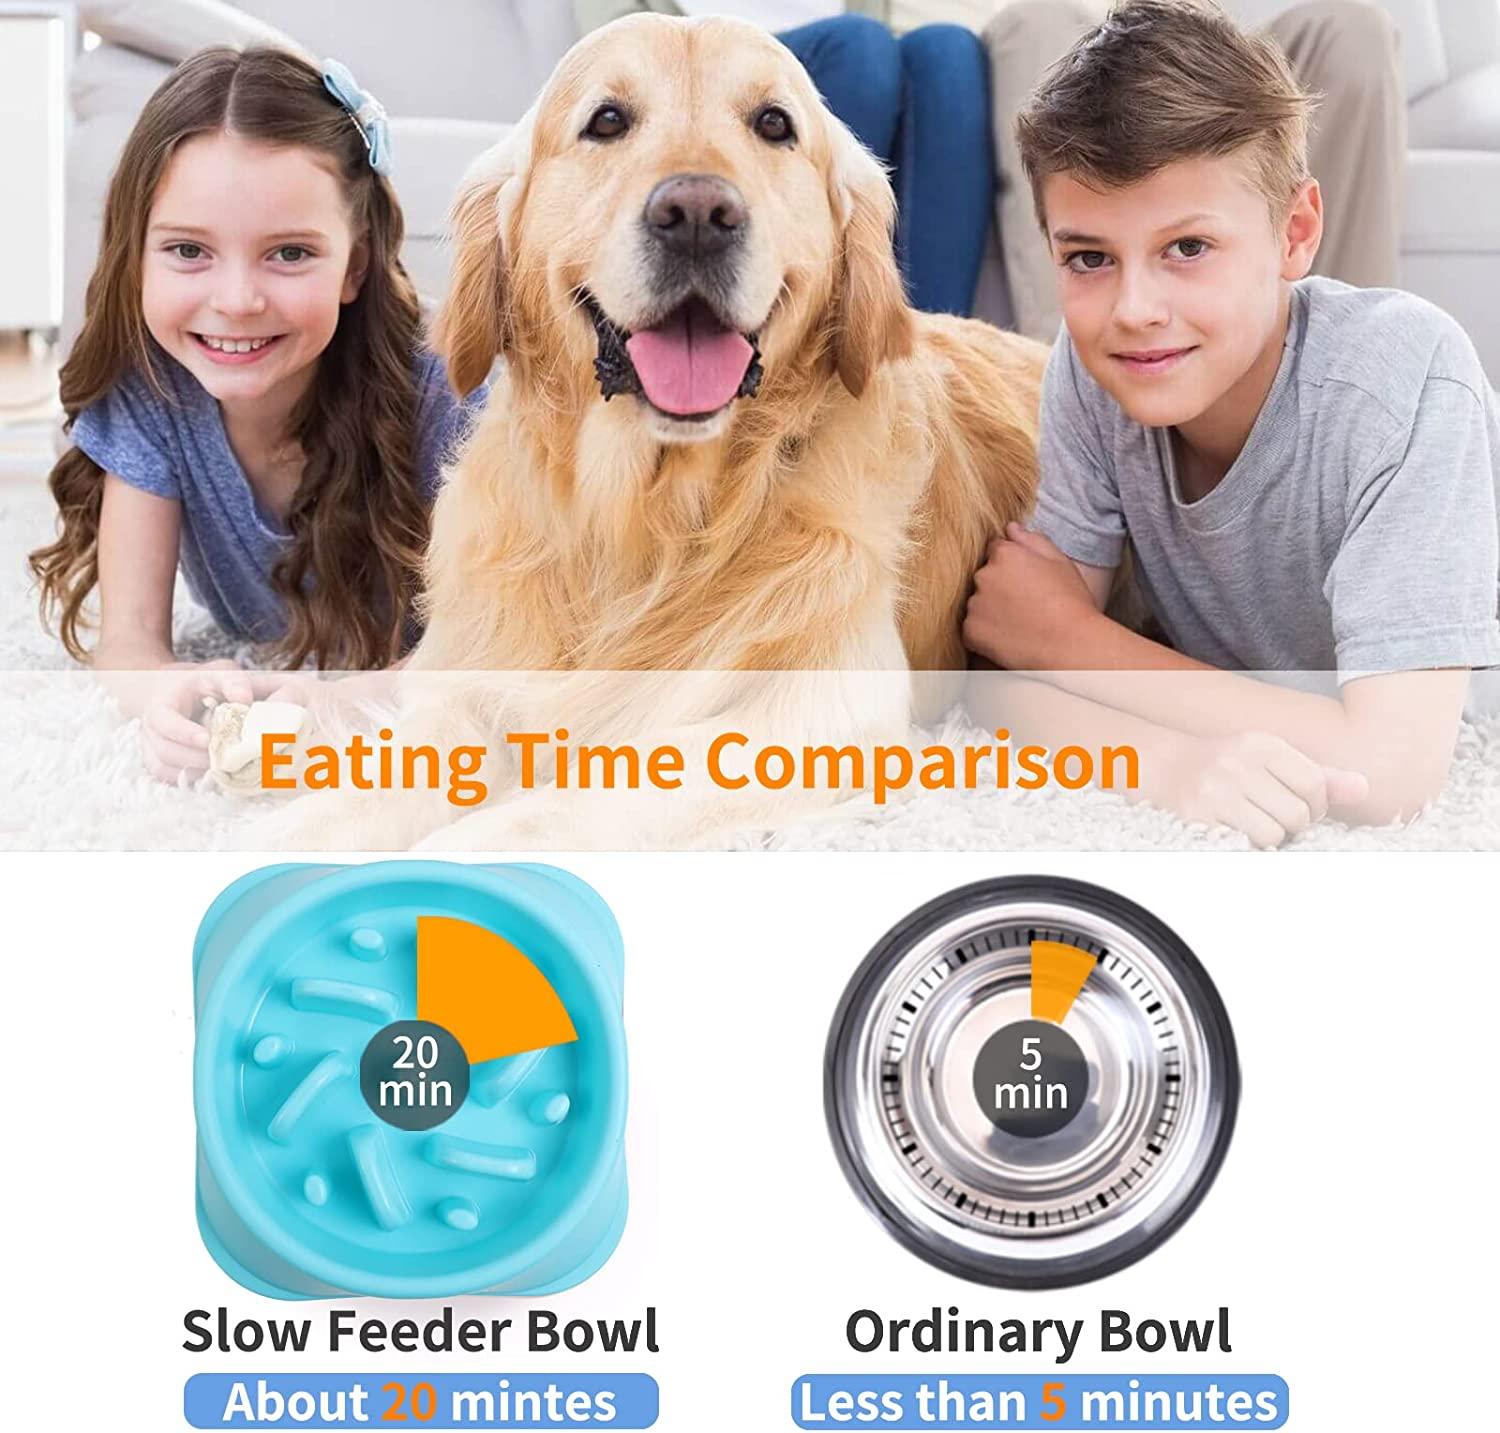 Flexzion Slow Feeder Dog Bowl, Anti-Gulping Dog Puzzle Bowl, Anti-Choke Non Slip Fun Feeder Bowl Interactive Bloat Stop Healthy Slow Eat Pet Bowl for